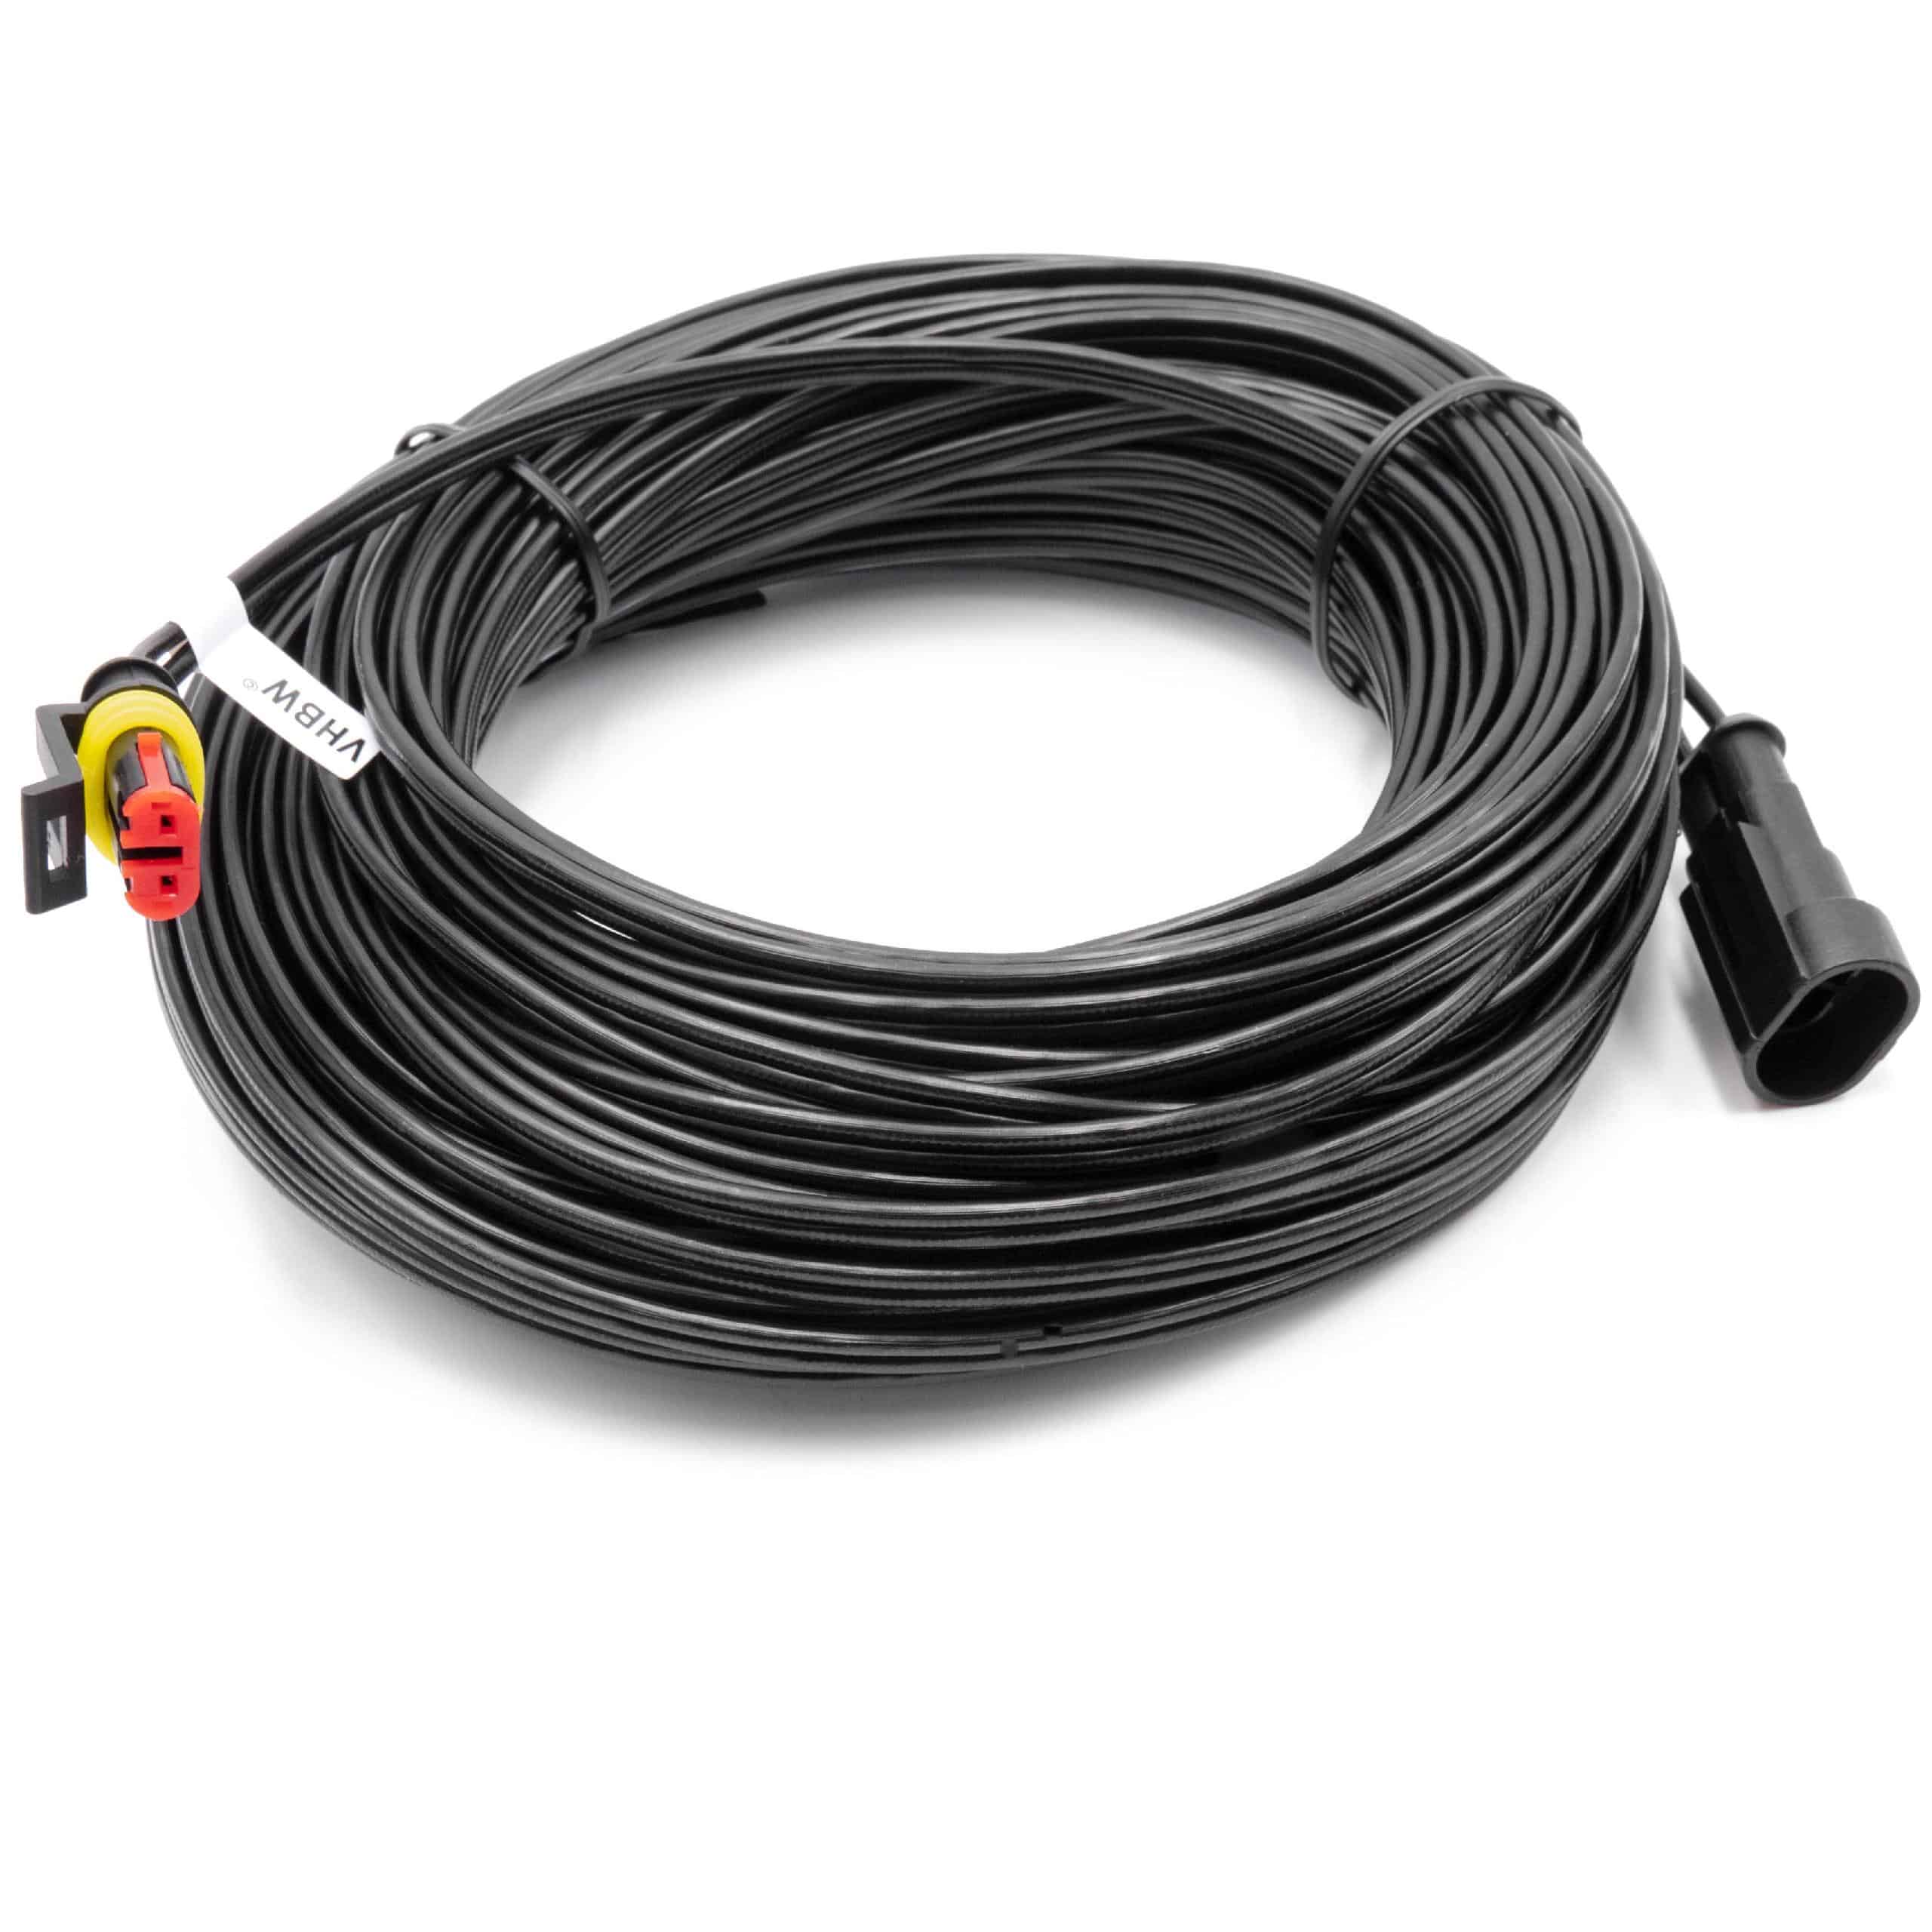 Cable de bajo voltaje reemplaza Honda 31786-VP7-013 - cable trafo, 20 m